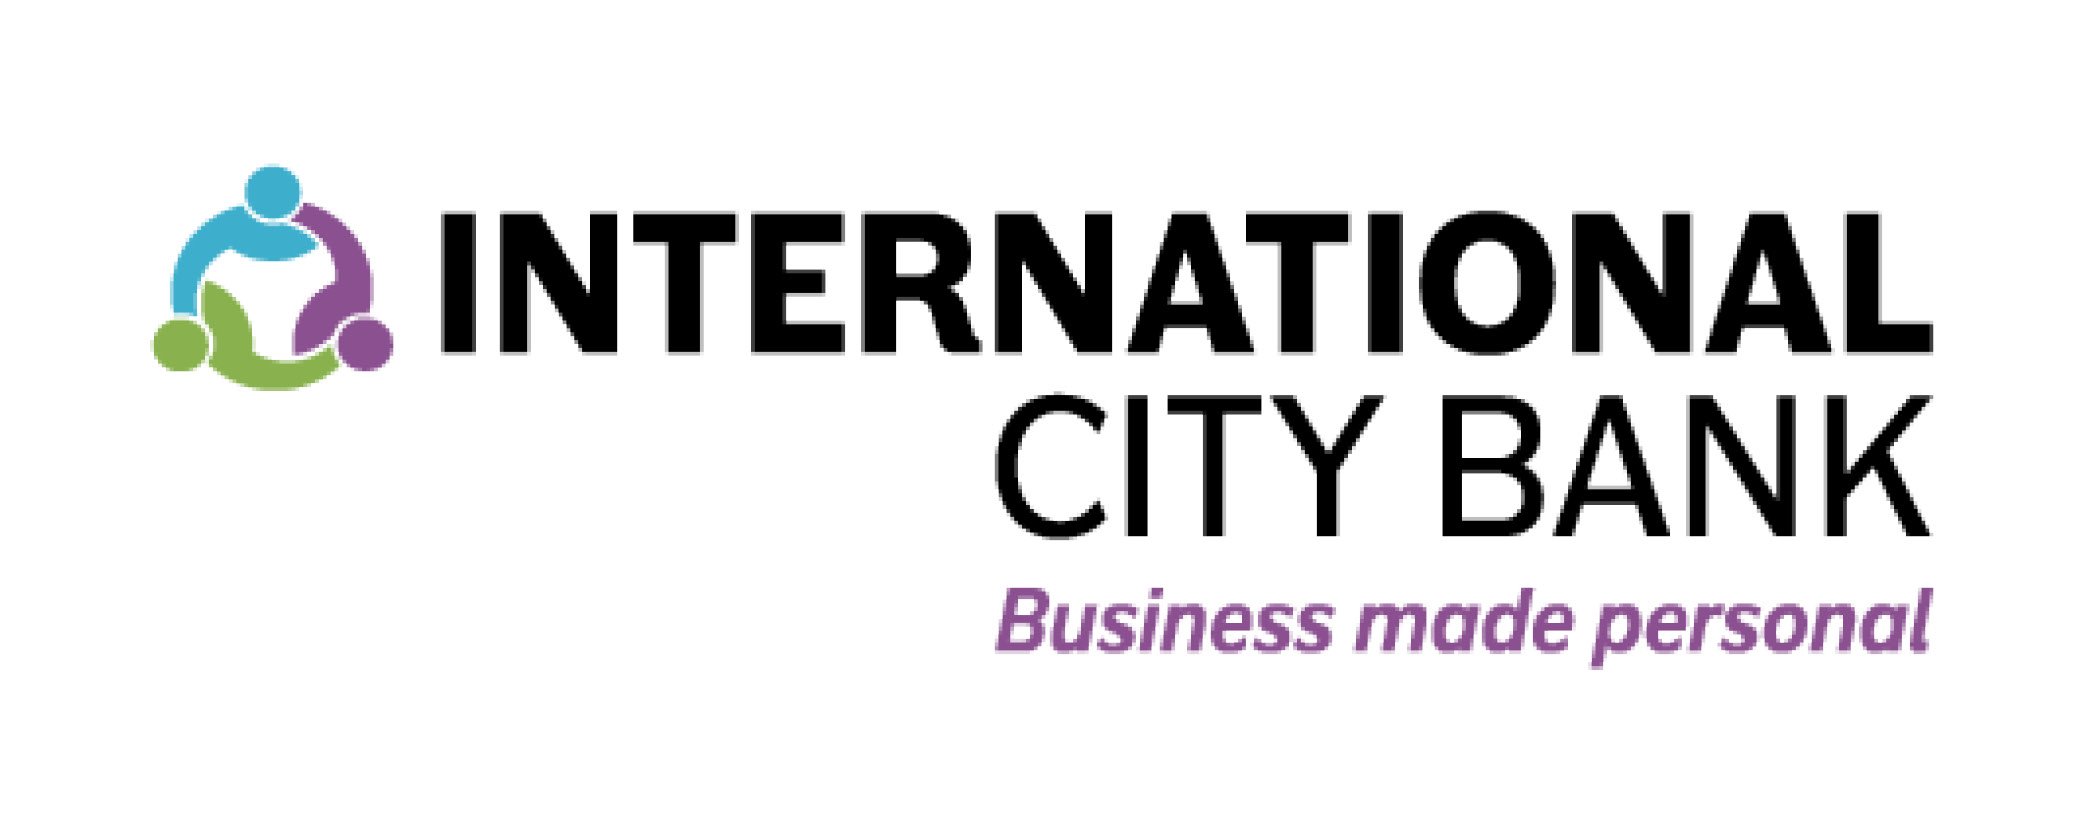 International City Bank.jpg